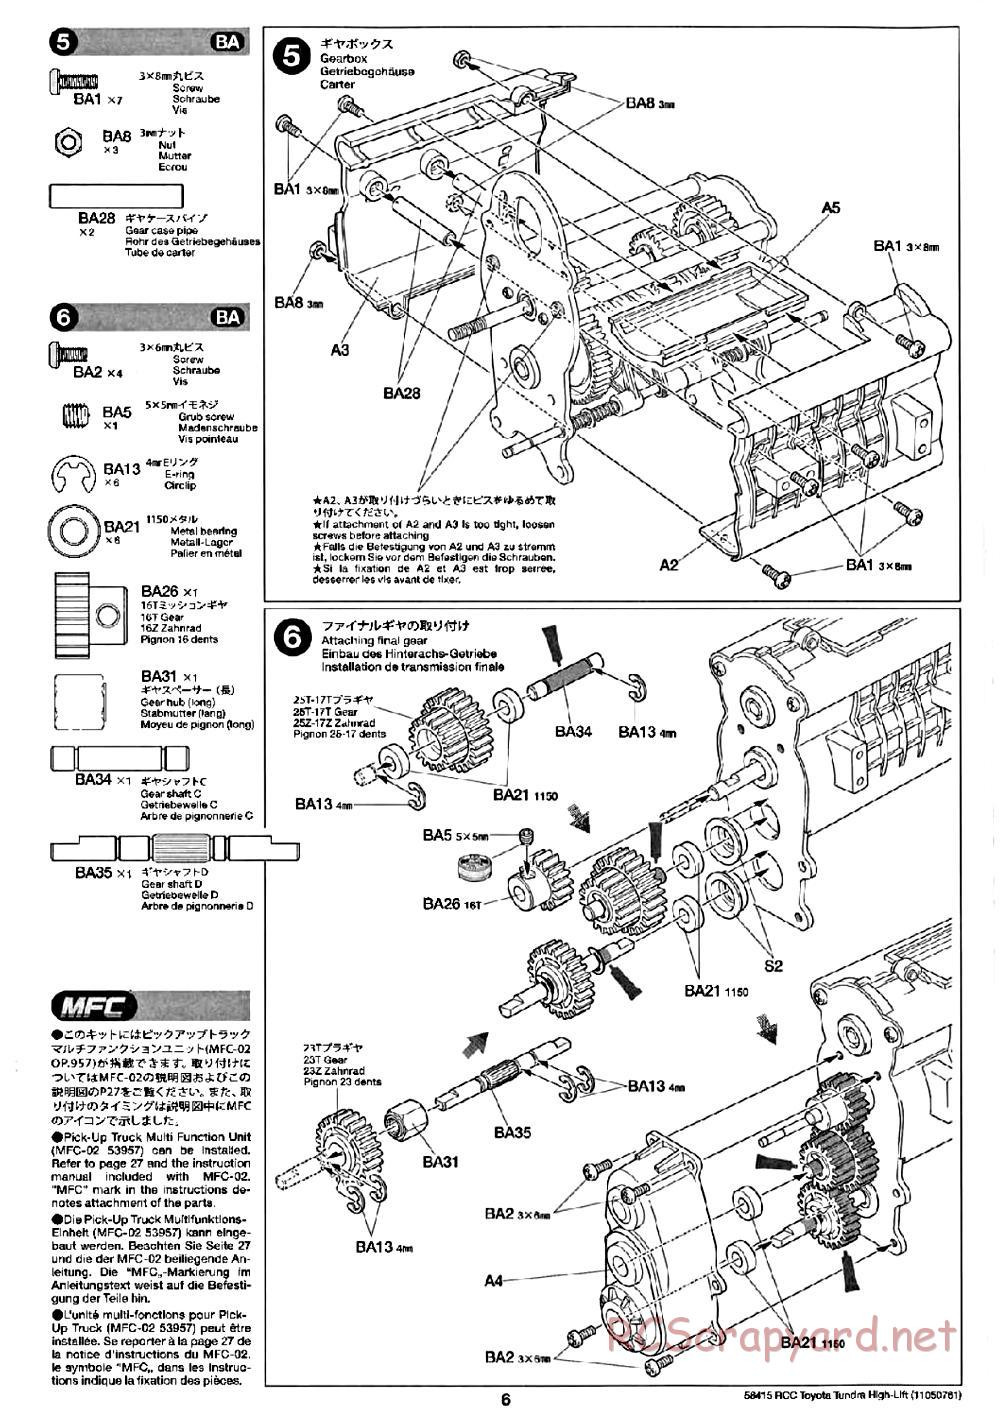 Tamiya - Toyota Tundra High-Lift Chassis - Manual - Page 6